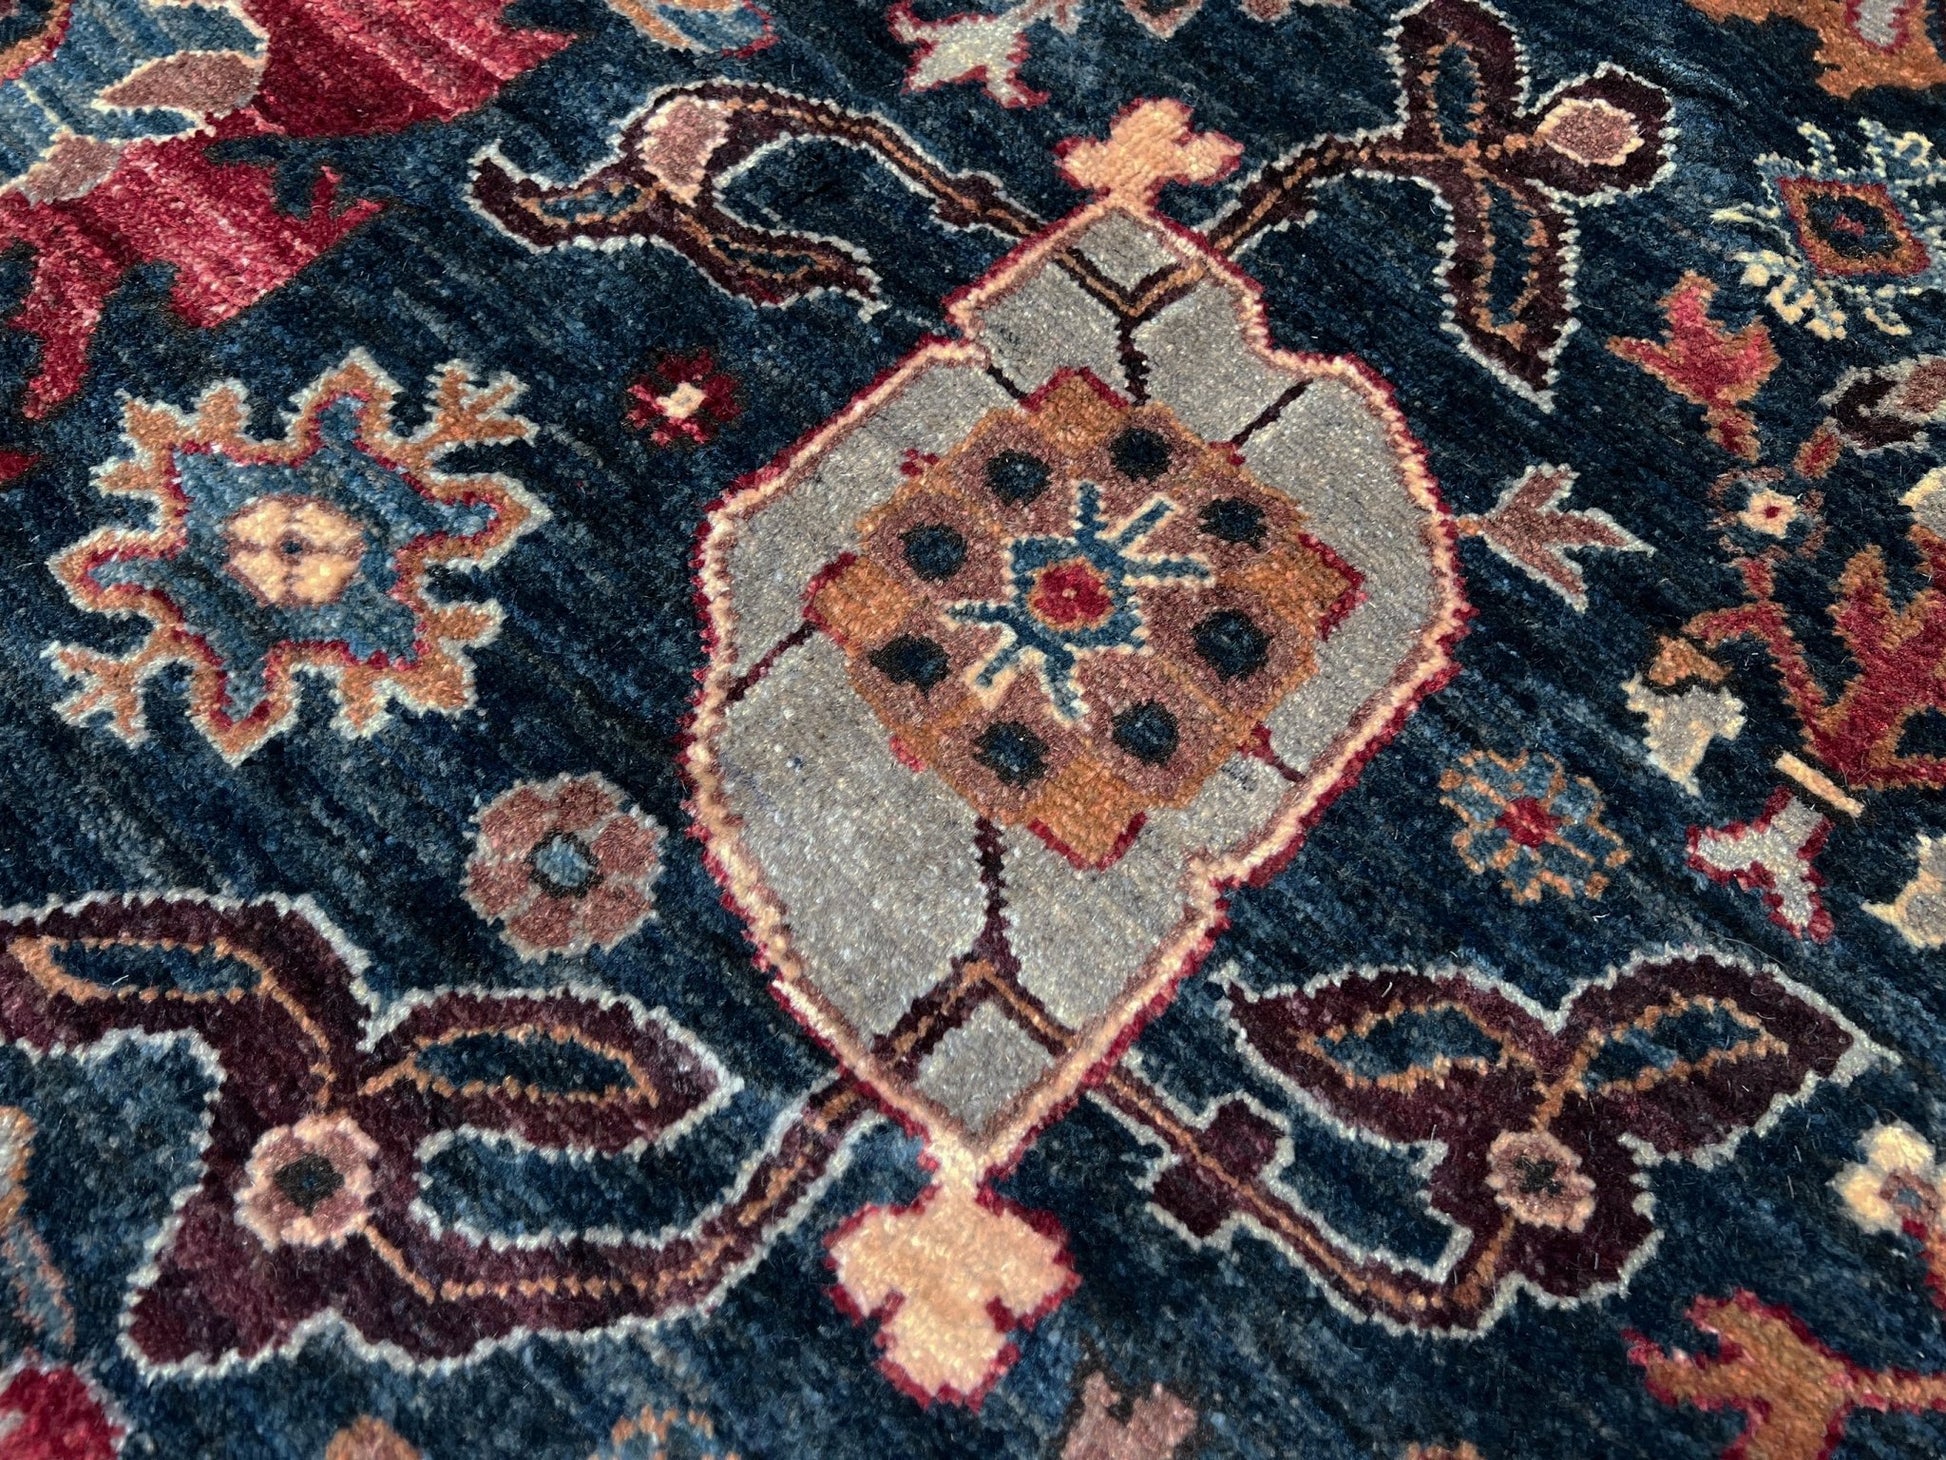 sultani handmade area rug. 9x12 rug for living room. Luxury living room rug shop palo alto menlo park. Oriental rug shop san francisco bay area.